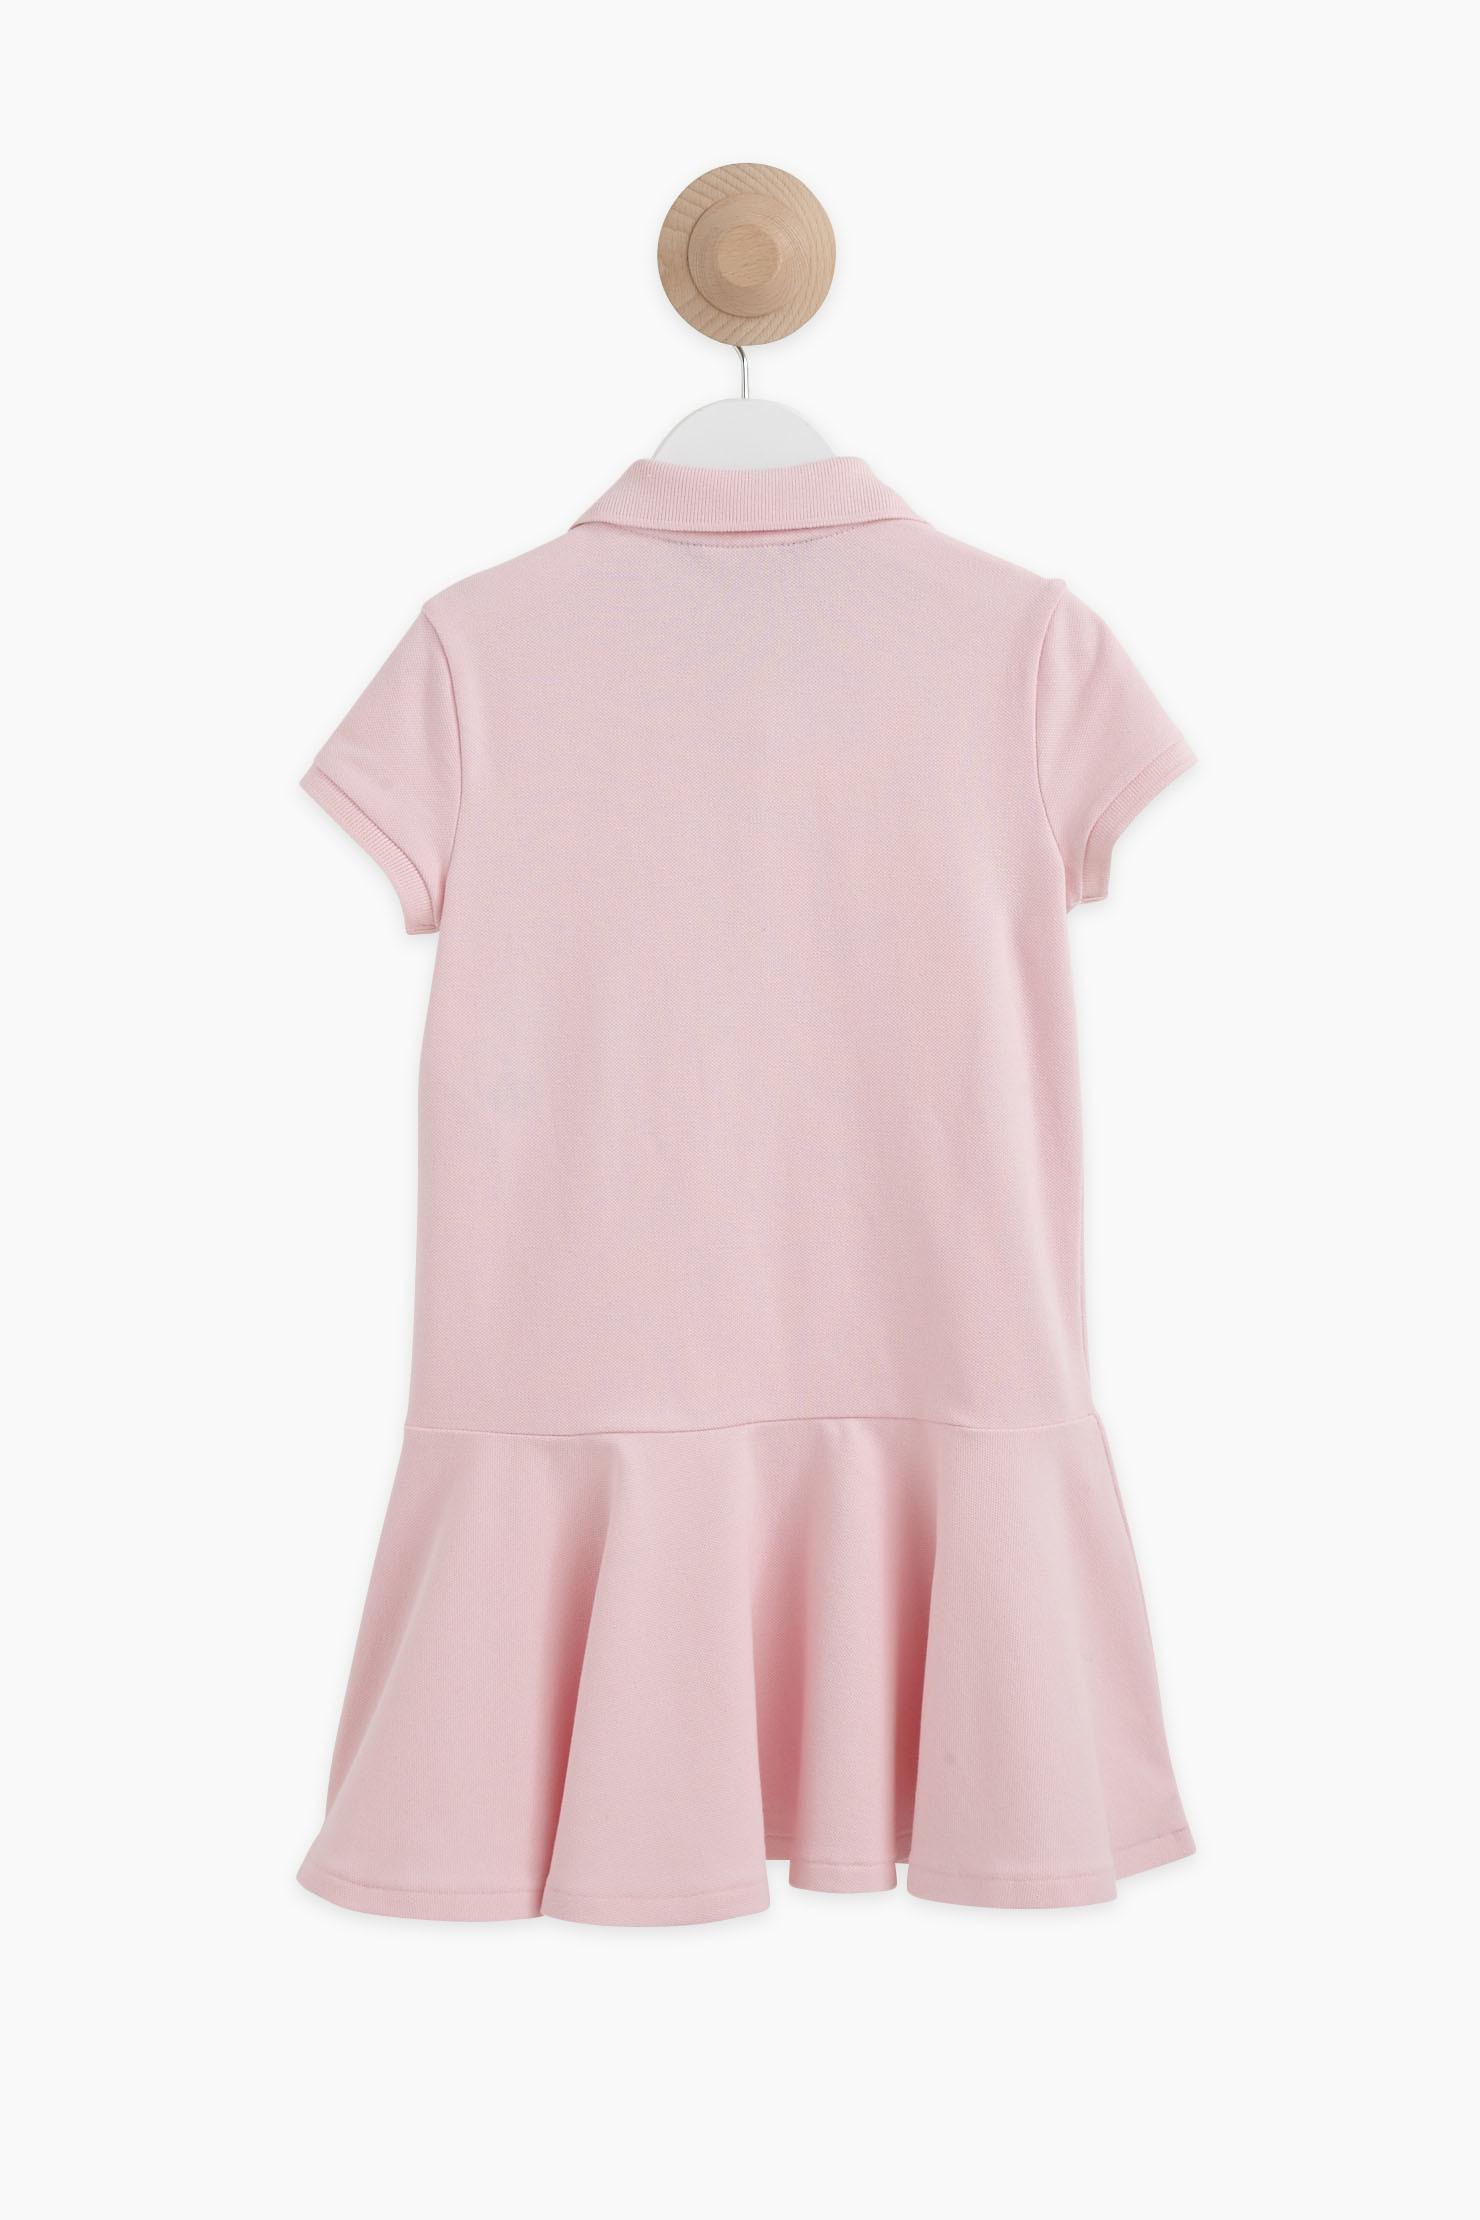 Lyst - Polo Ralph Lauren Dresse & Skirt in Pink